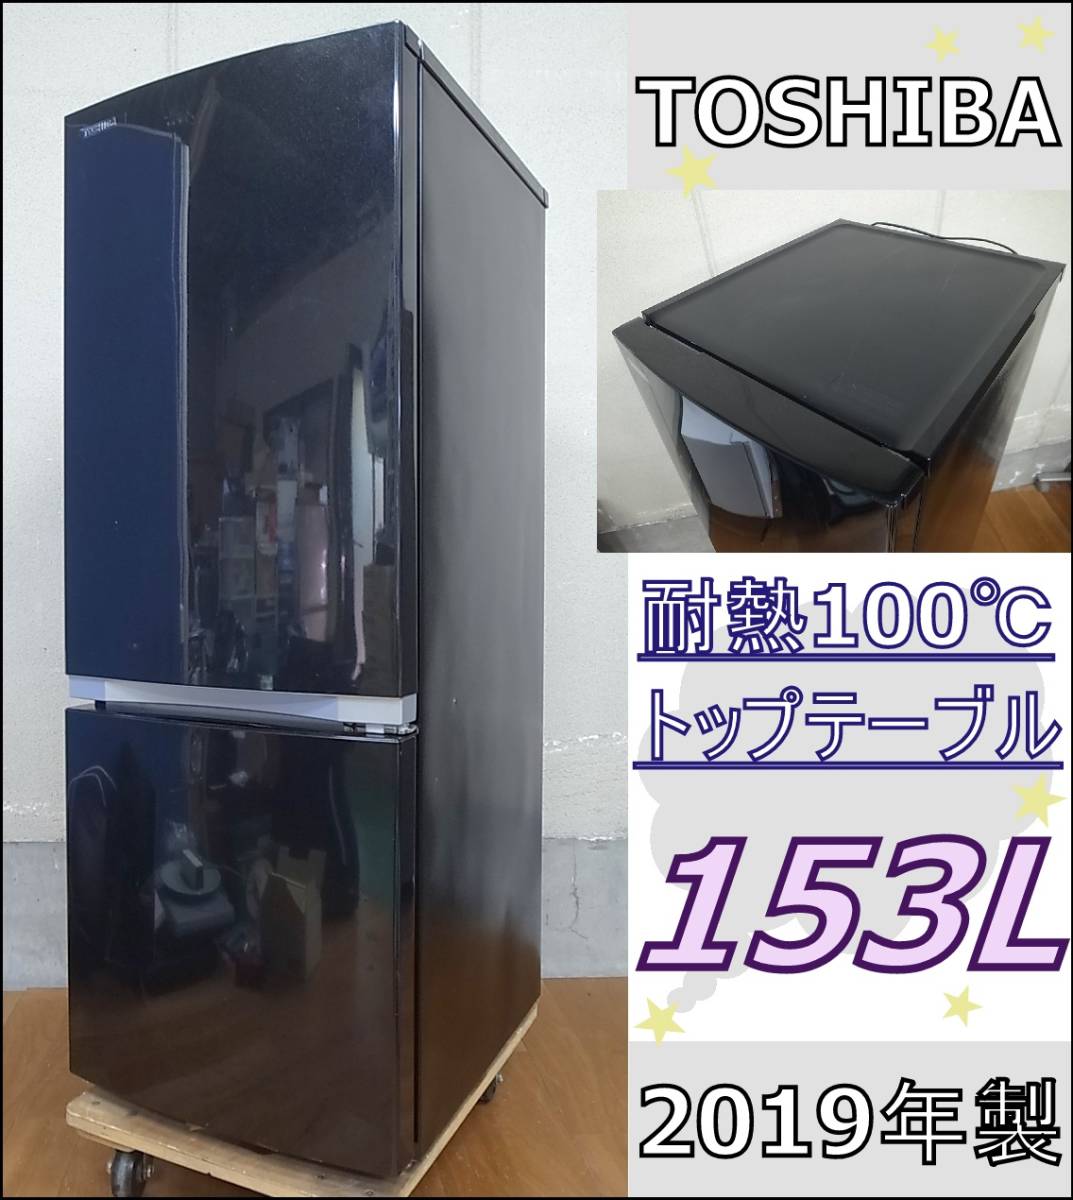 新品 】 TOSHIBA GR-P15BS(K) - 冷蔵庫 - hlt.no